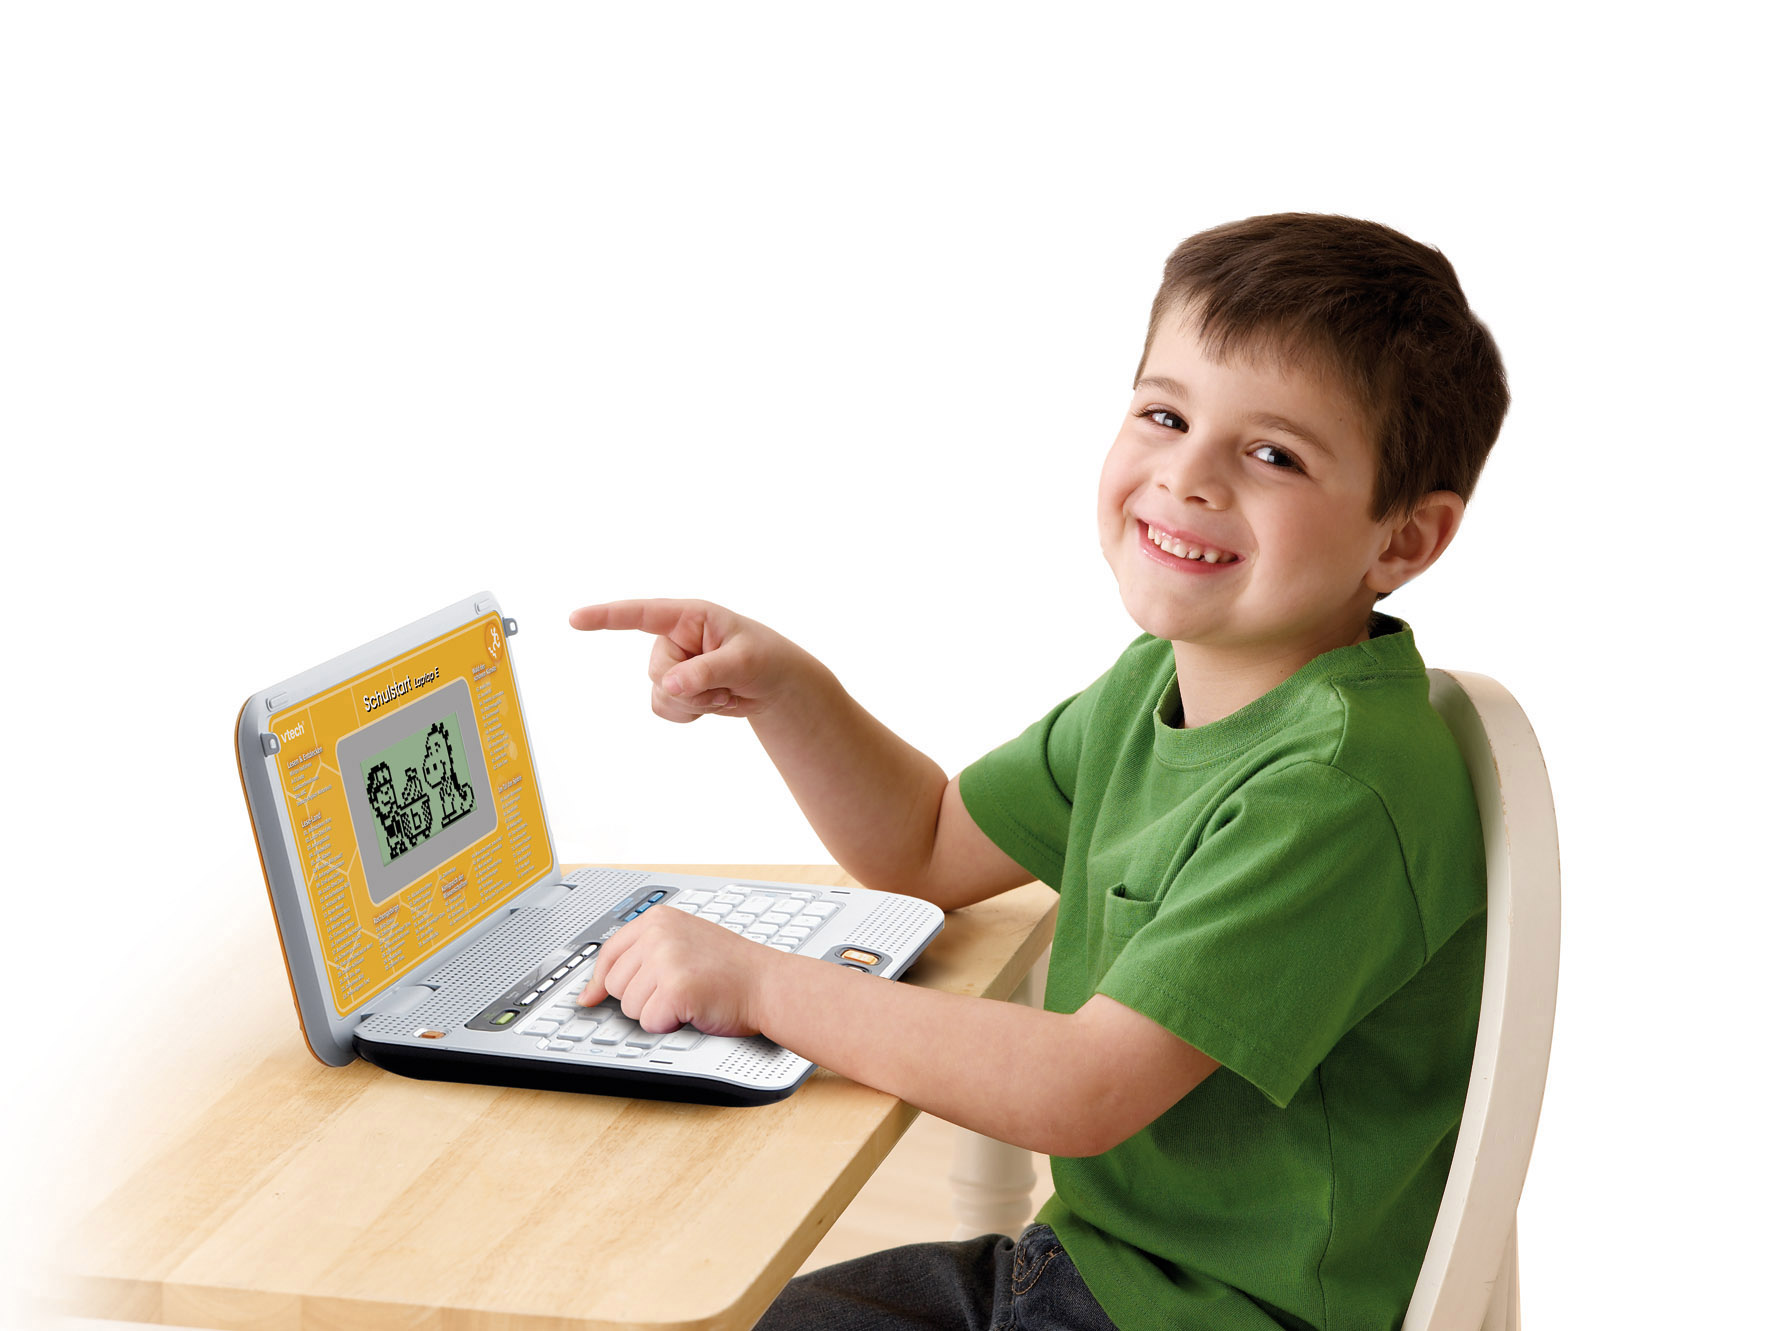 VTECH Schulstart E Orange/Grau Laptop Kinderlerncomputer